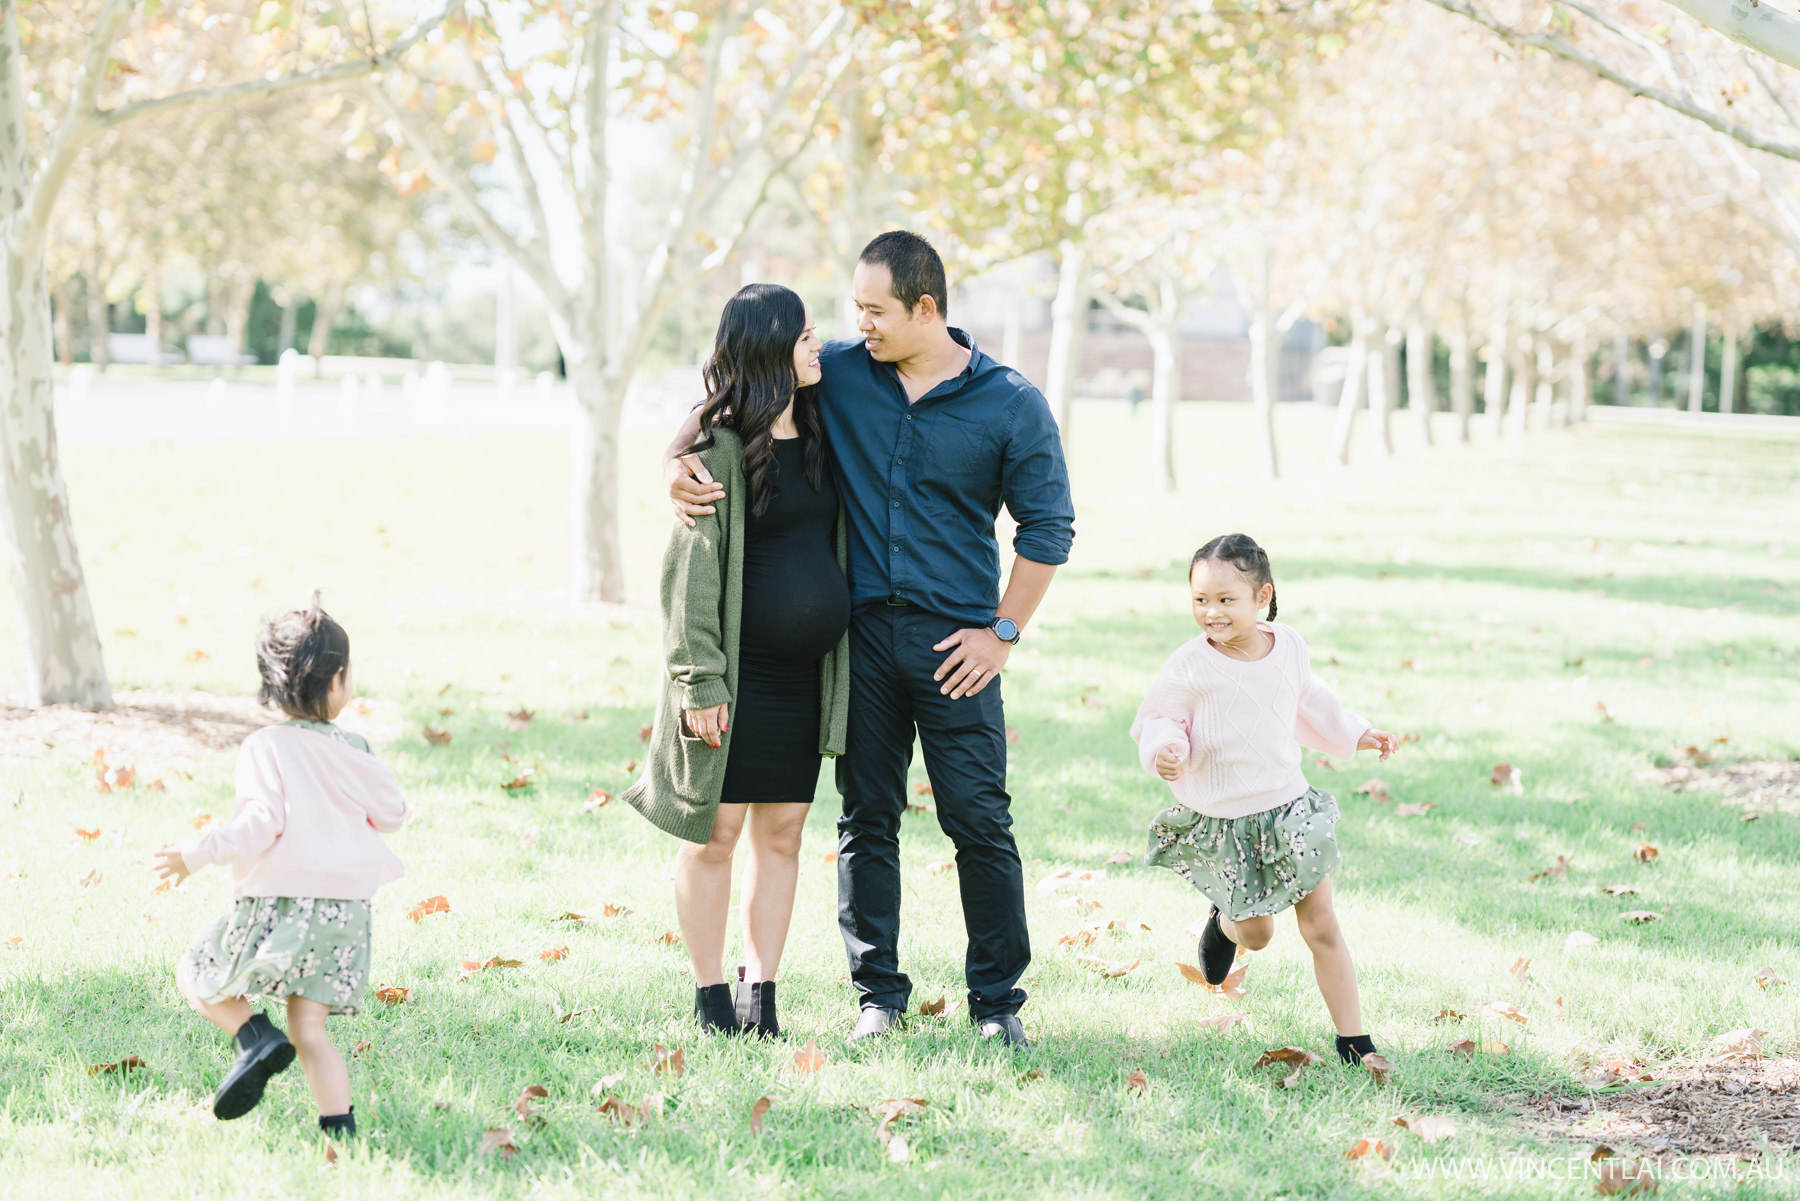 Autumn Lifestyle Outdoor Family Portrait Photography